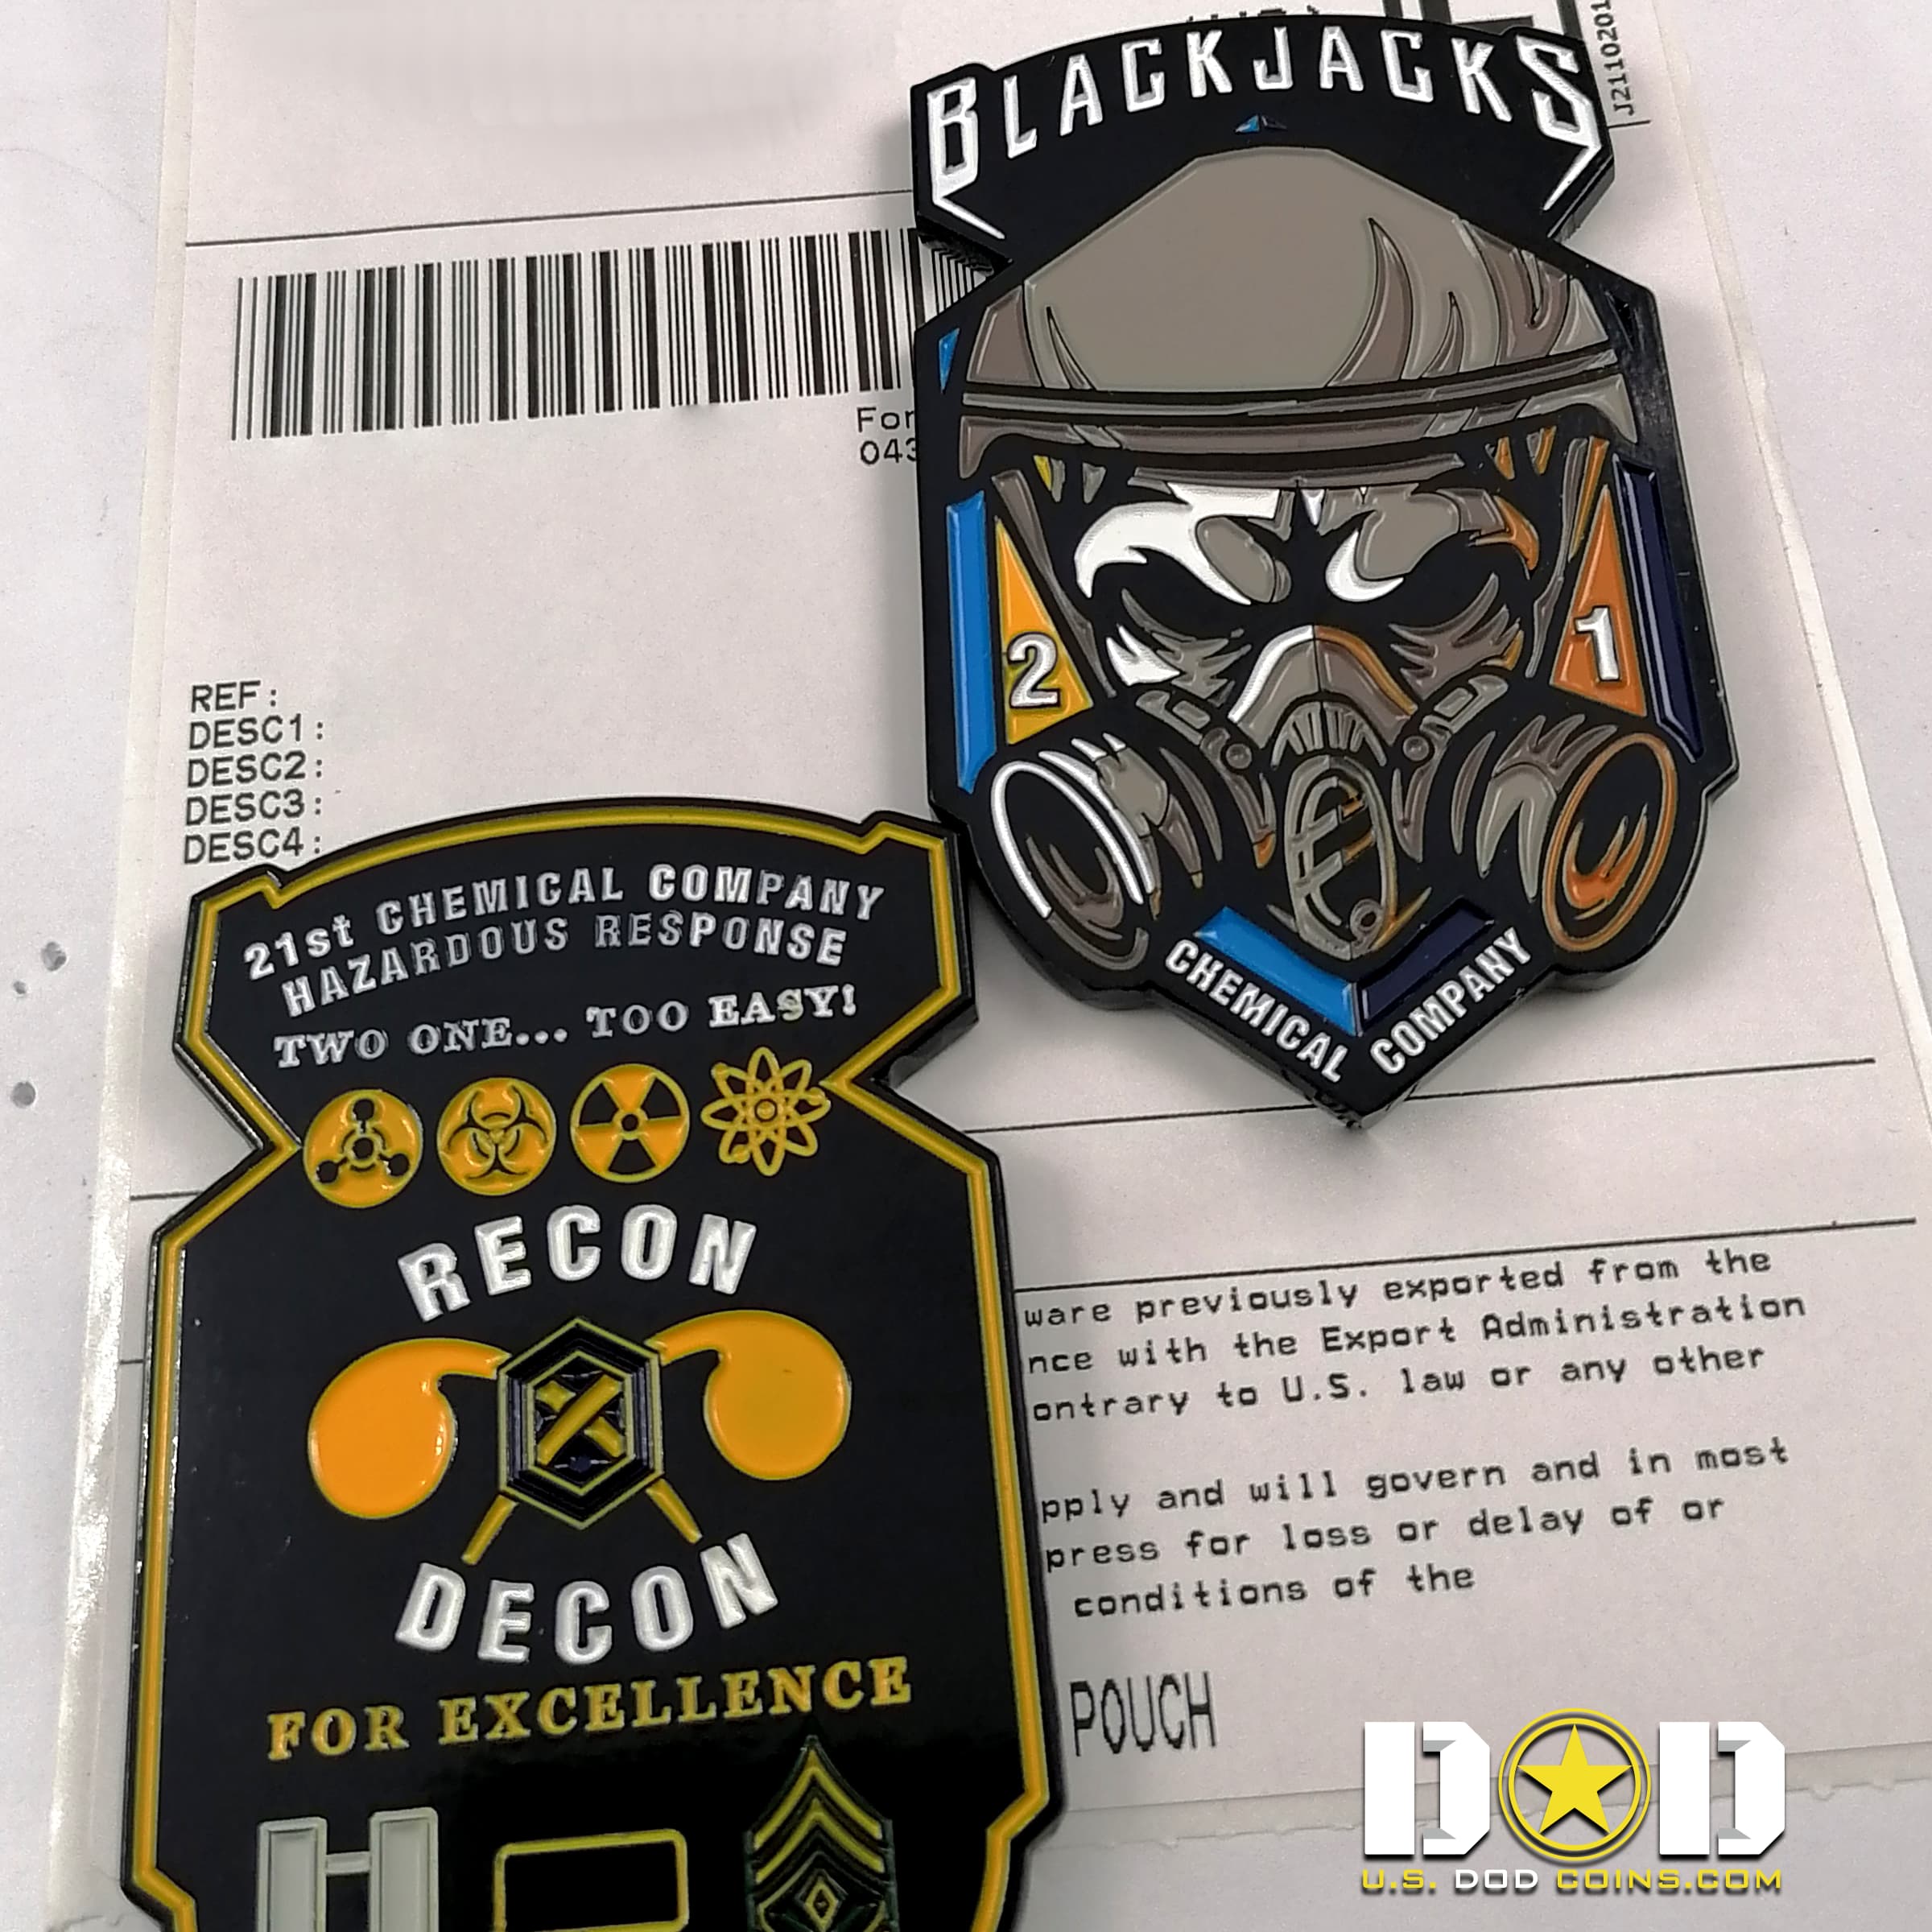 BlackJacks-Recon-Decon-Challenge-Coin_0003_599755